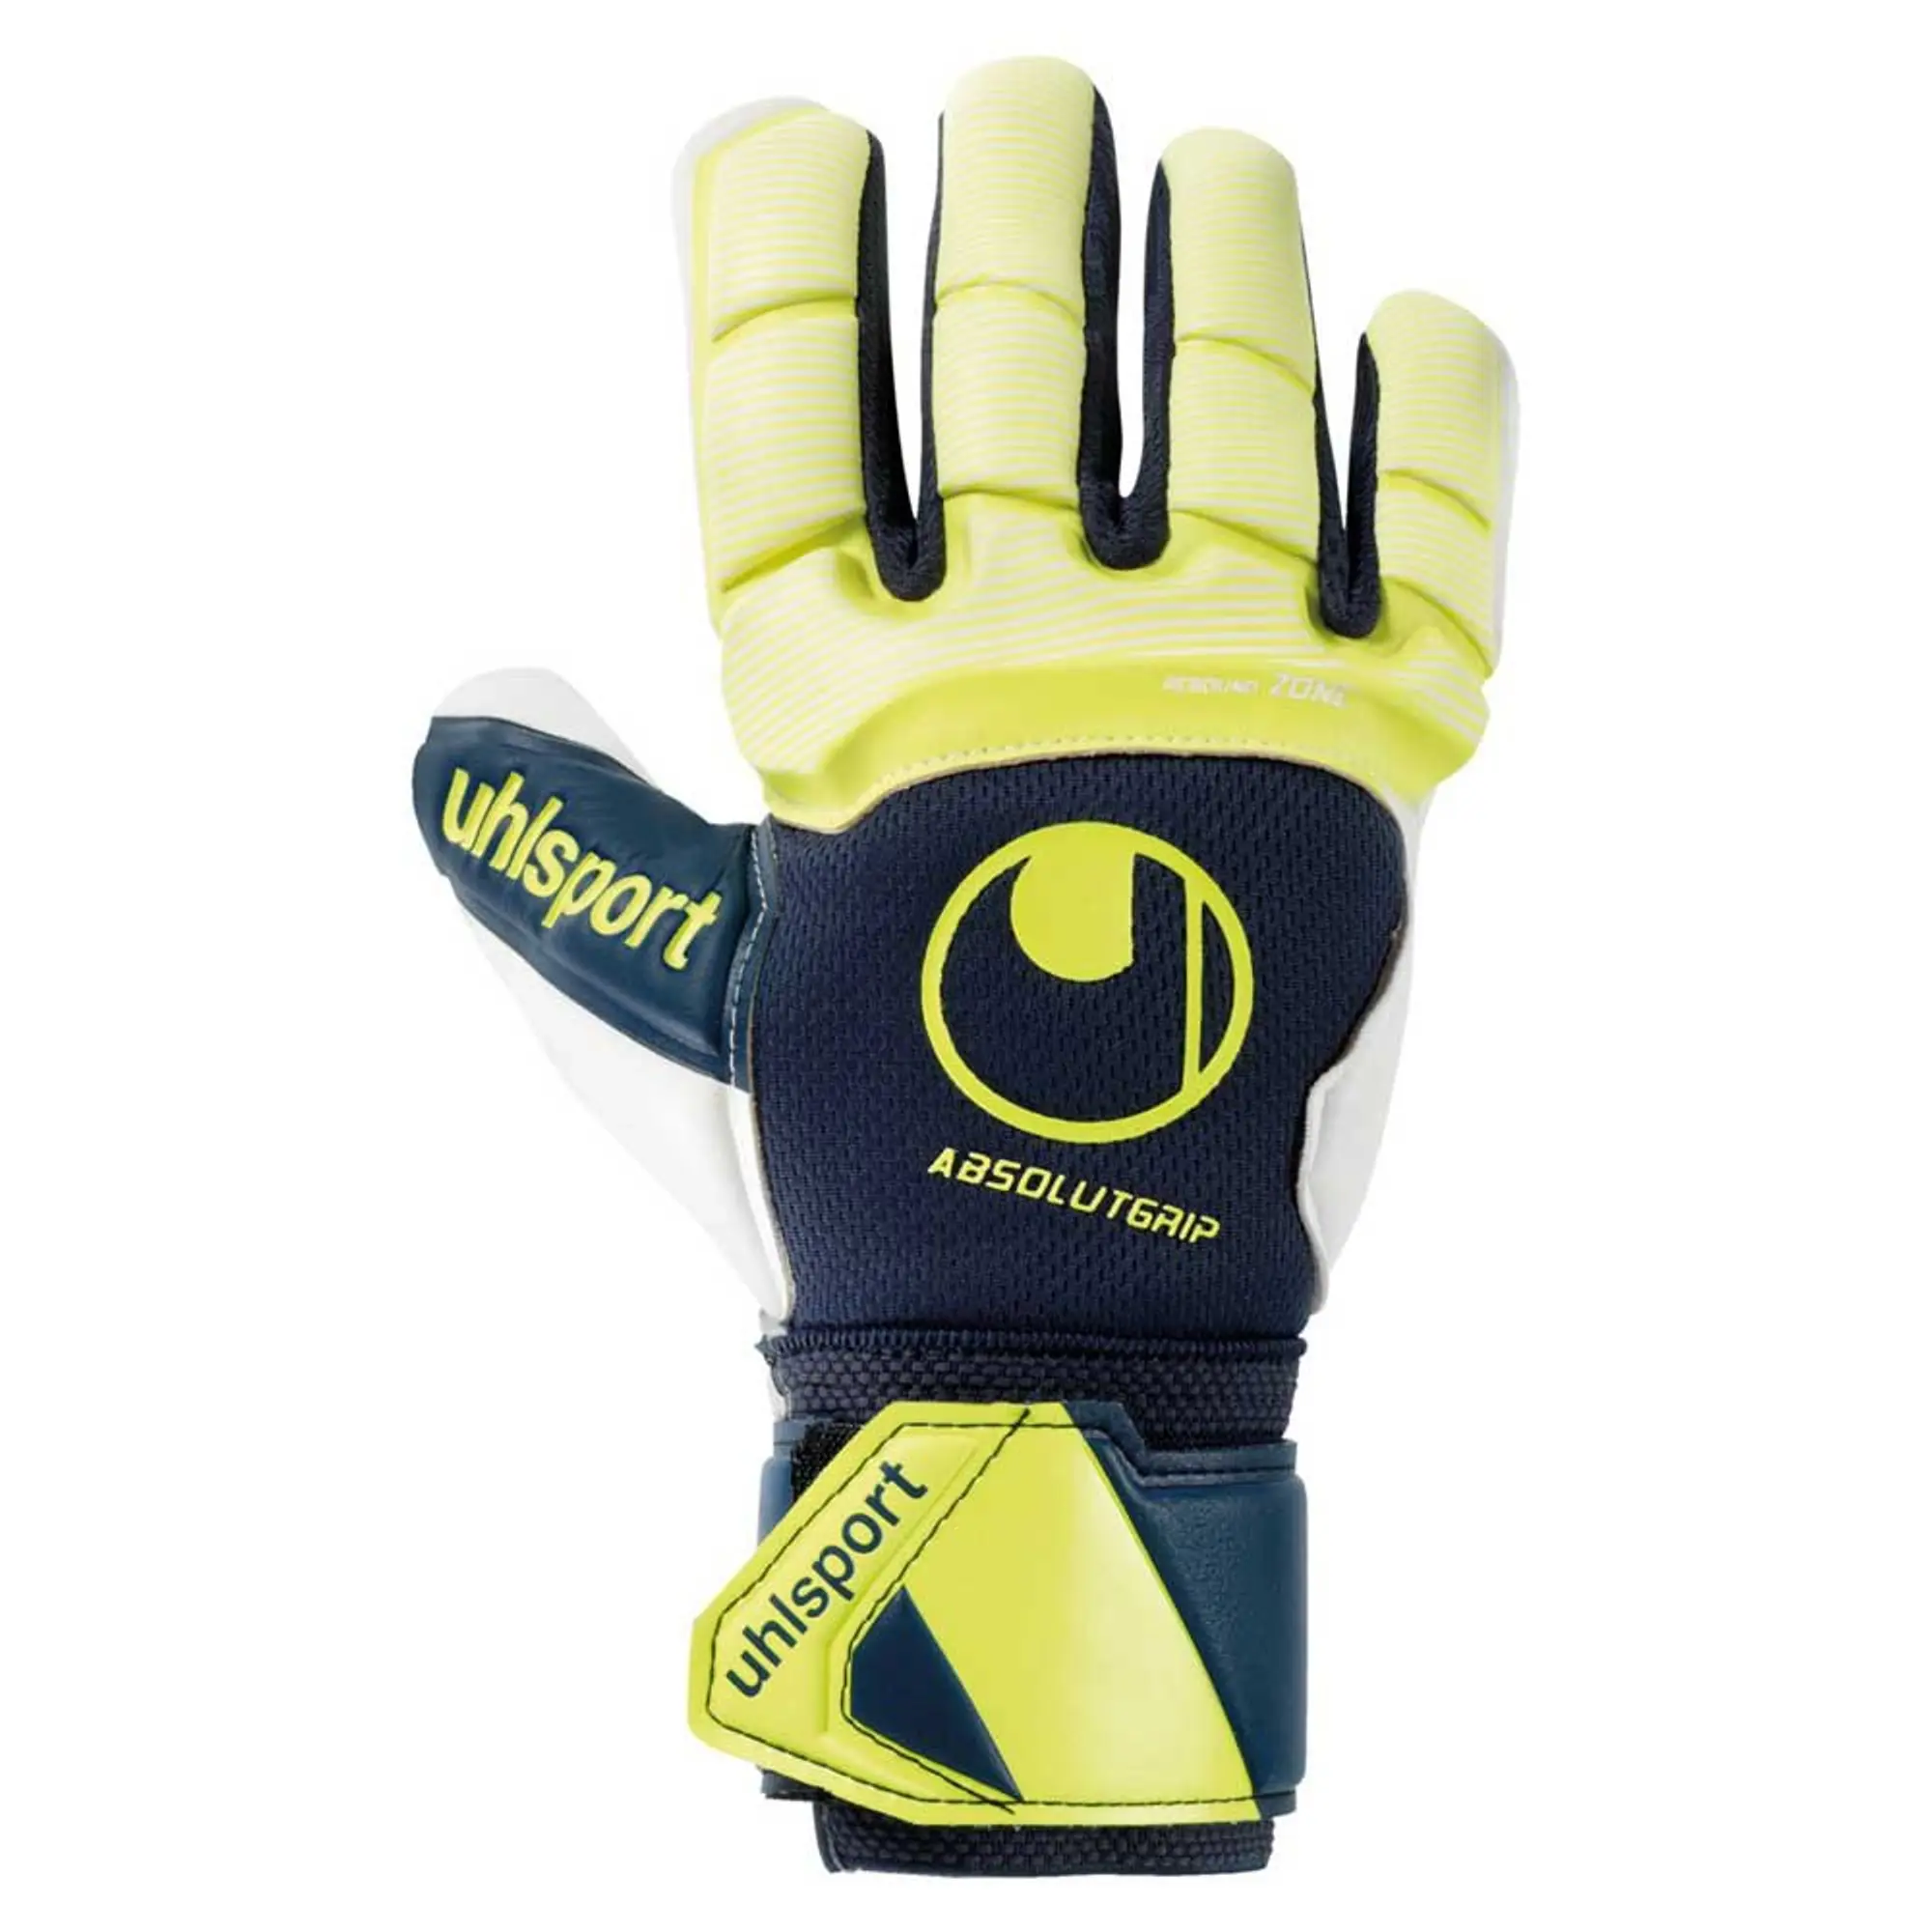 Uhlsport Absolutgrip Hn Pro Junior Goalkeeper Gloves  - Yellow,Blue